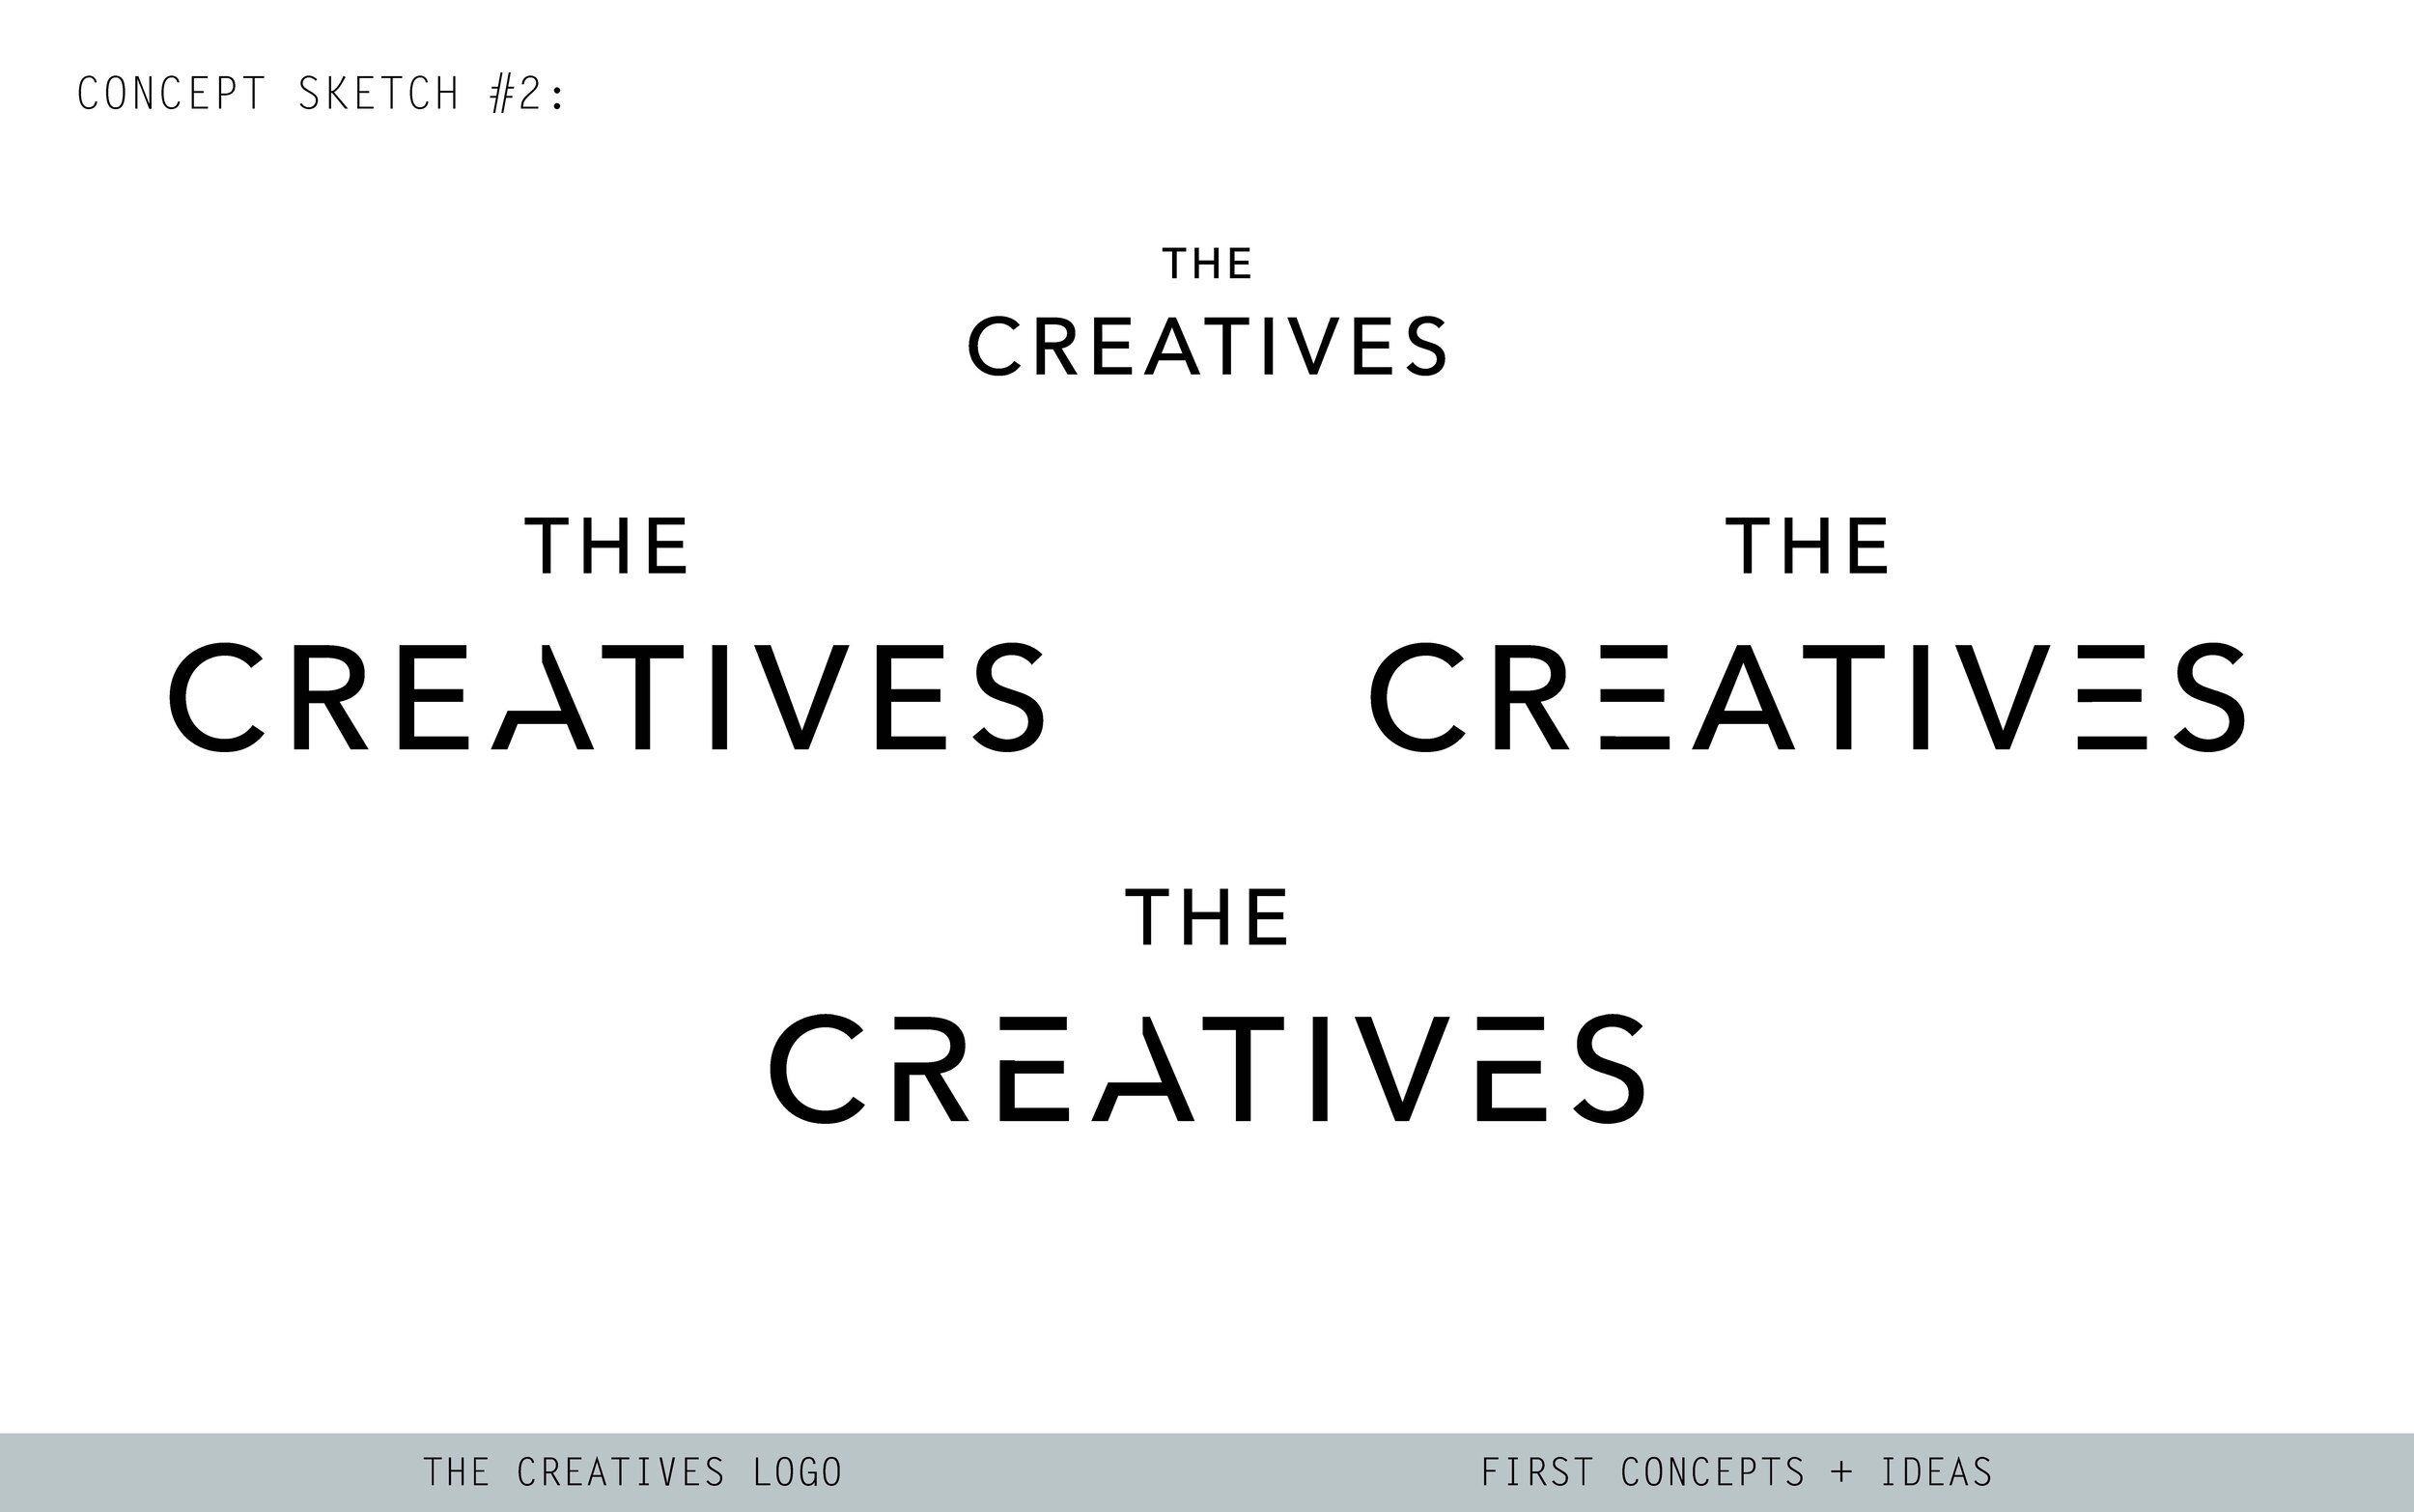 The Creatives LogoConceptSketches_Page_3.jpg